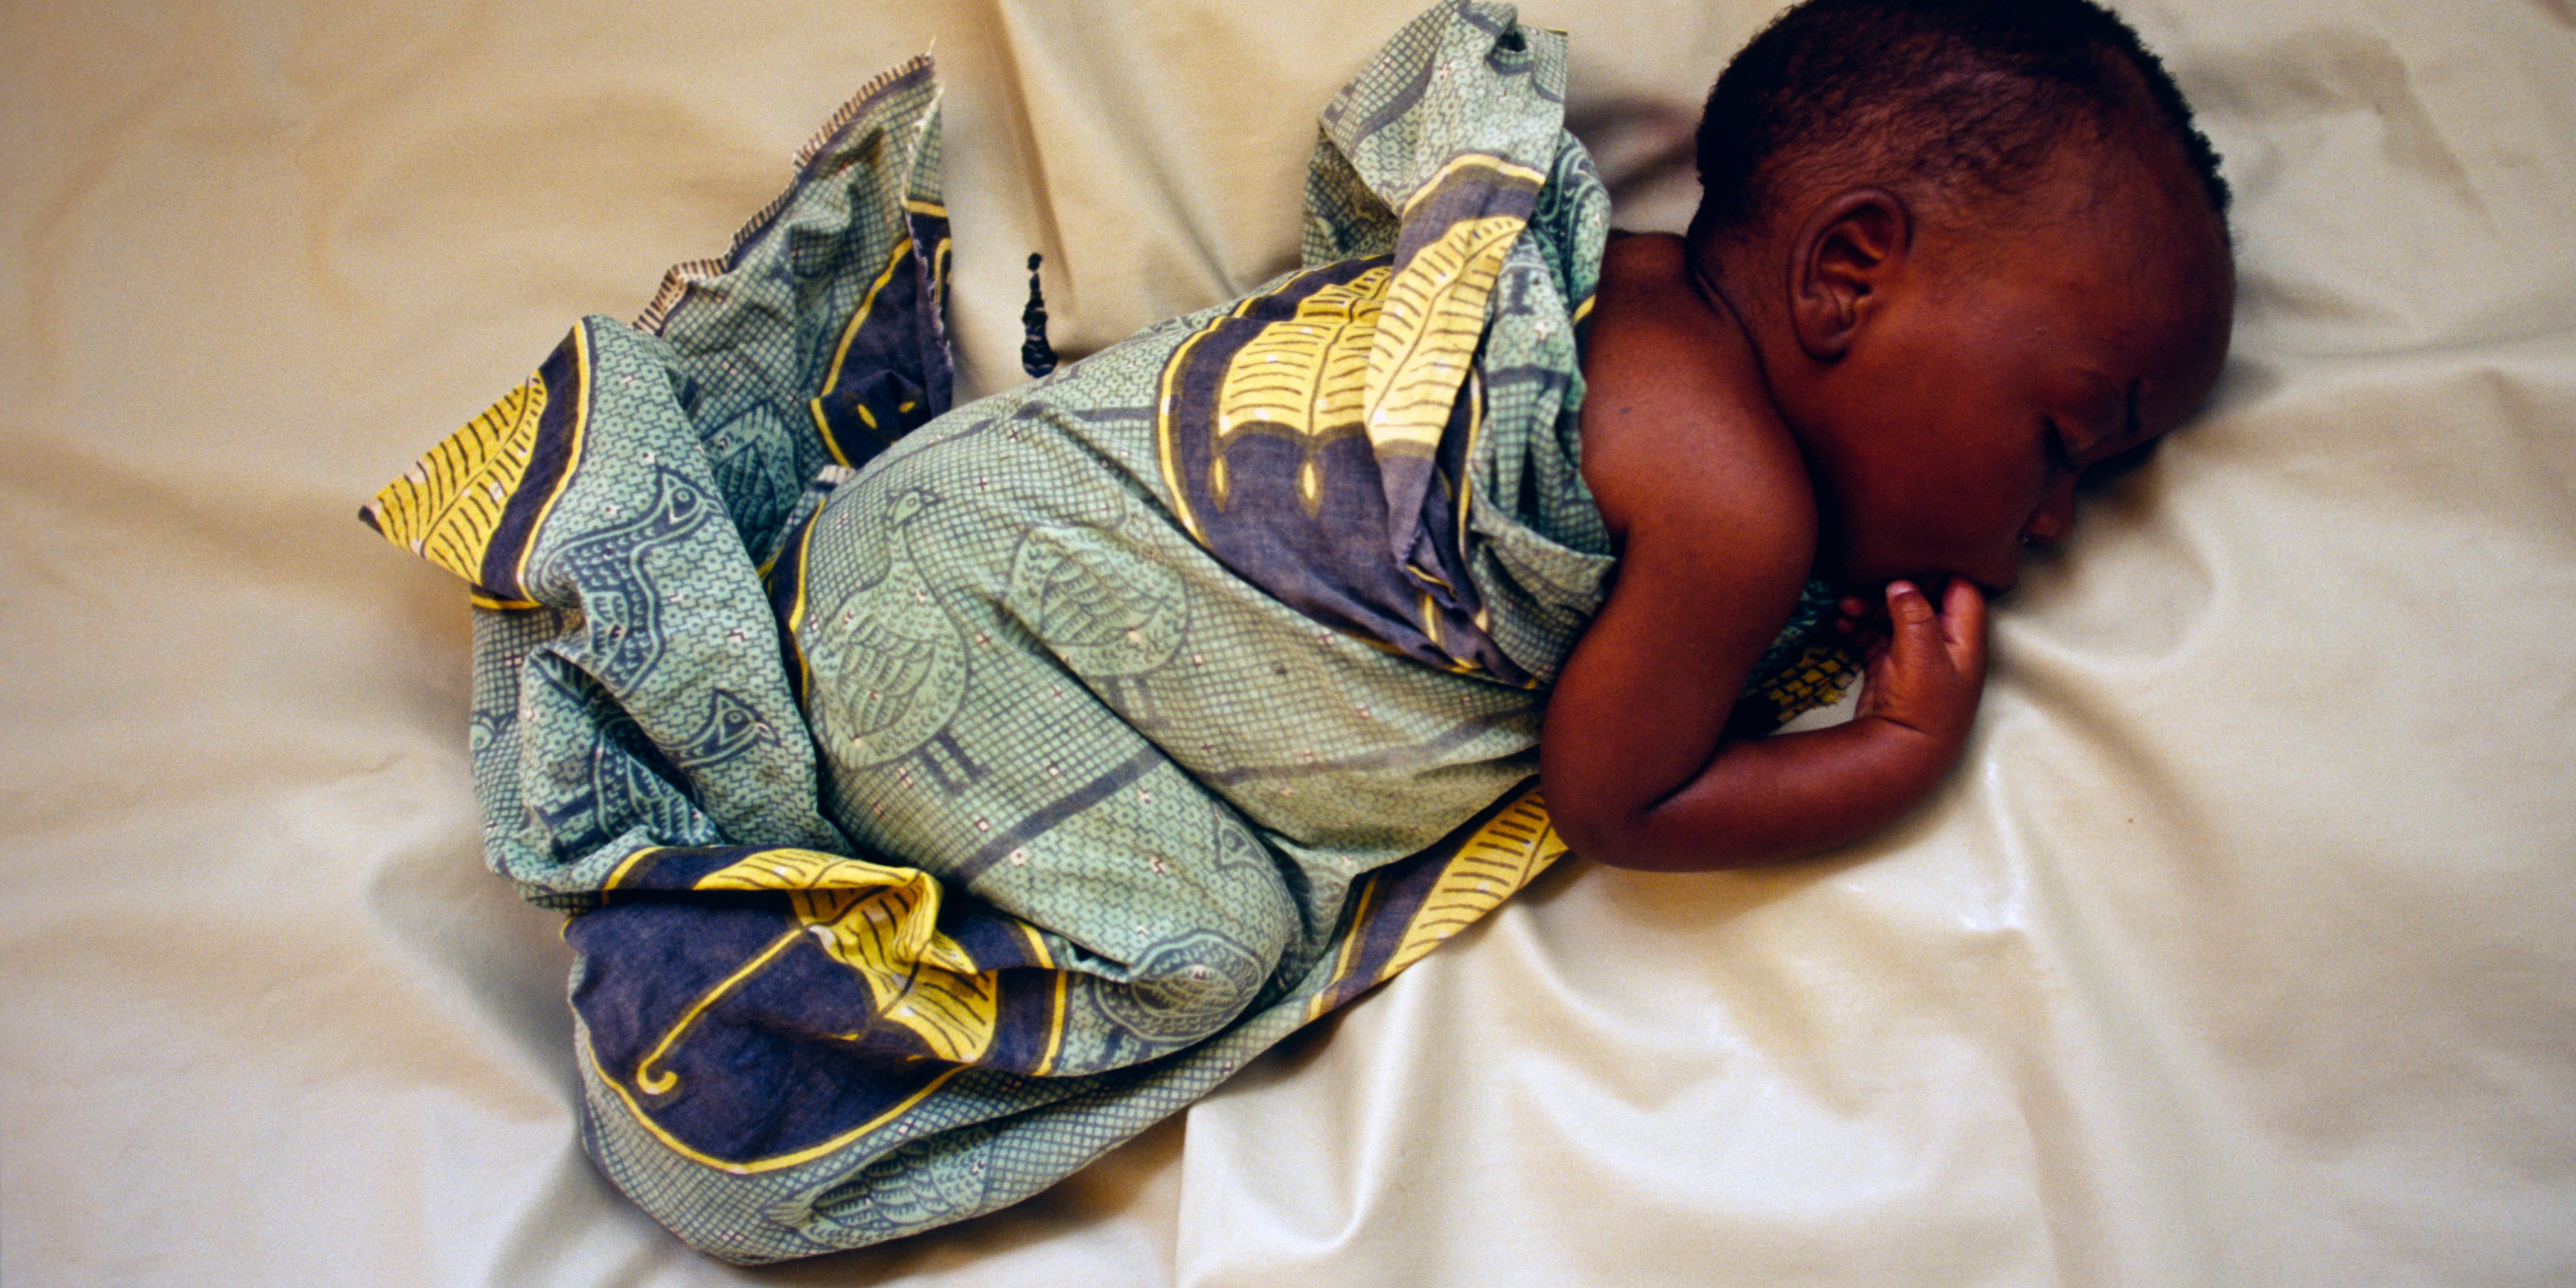 Burundi - Ruyigi - A newborn baby